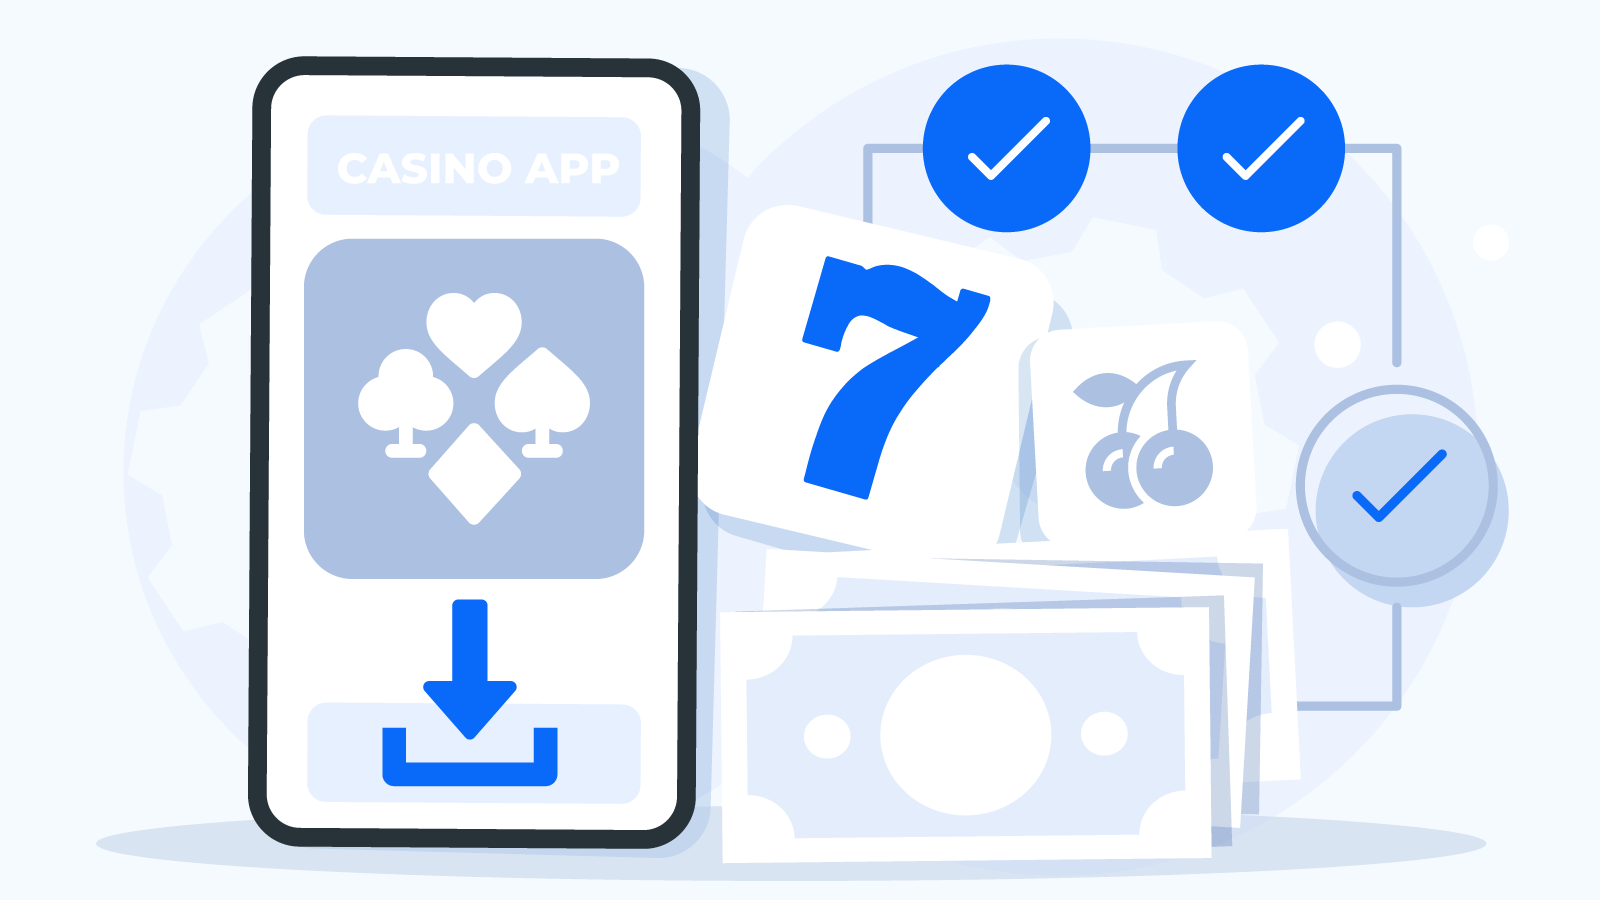 Installing Real Money Casino Apps